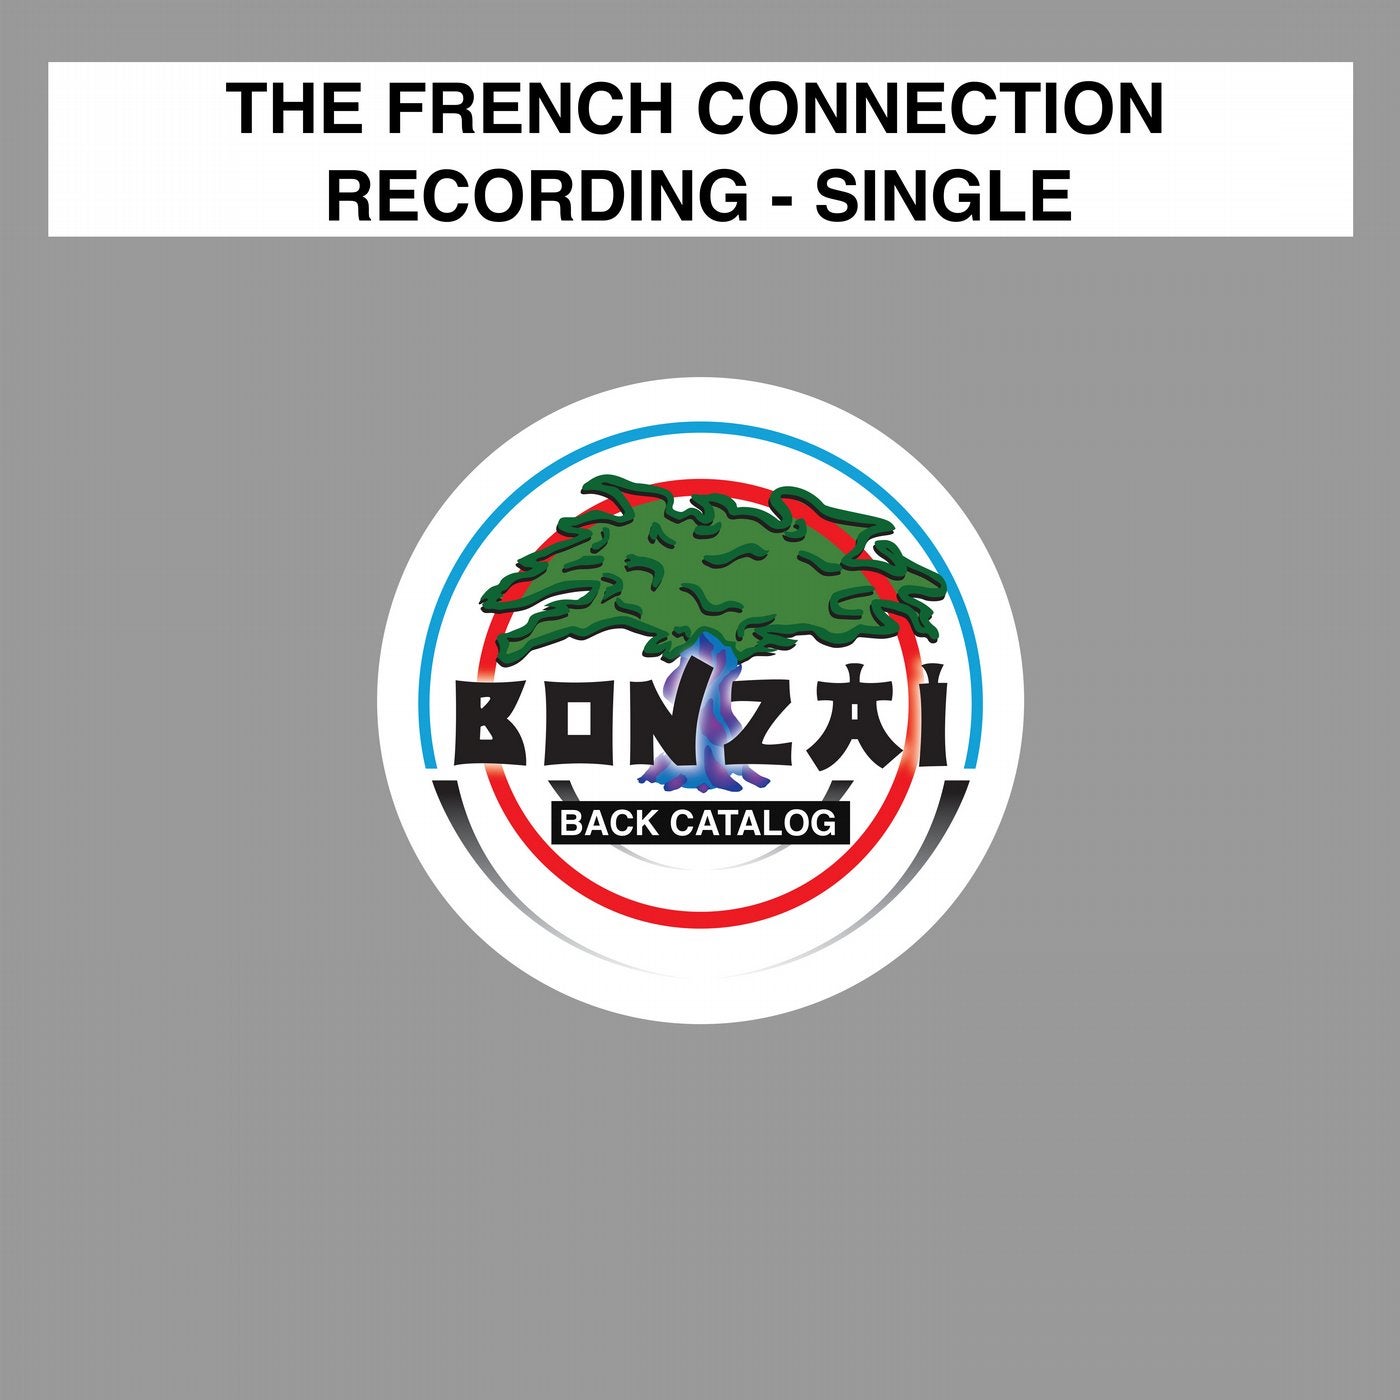 Recording - Single